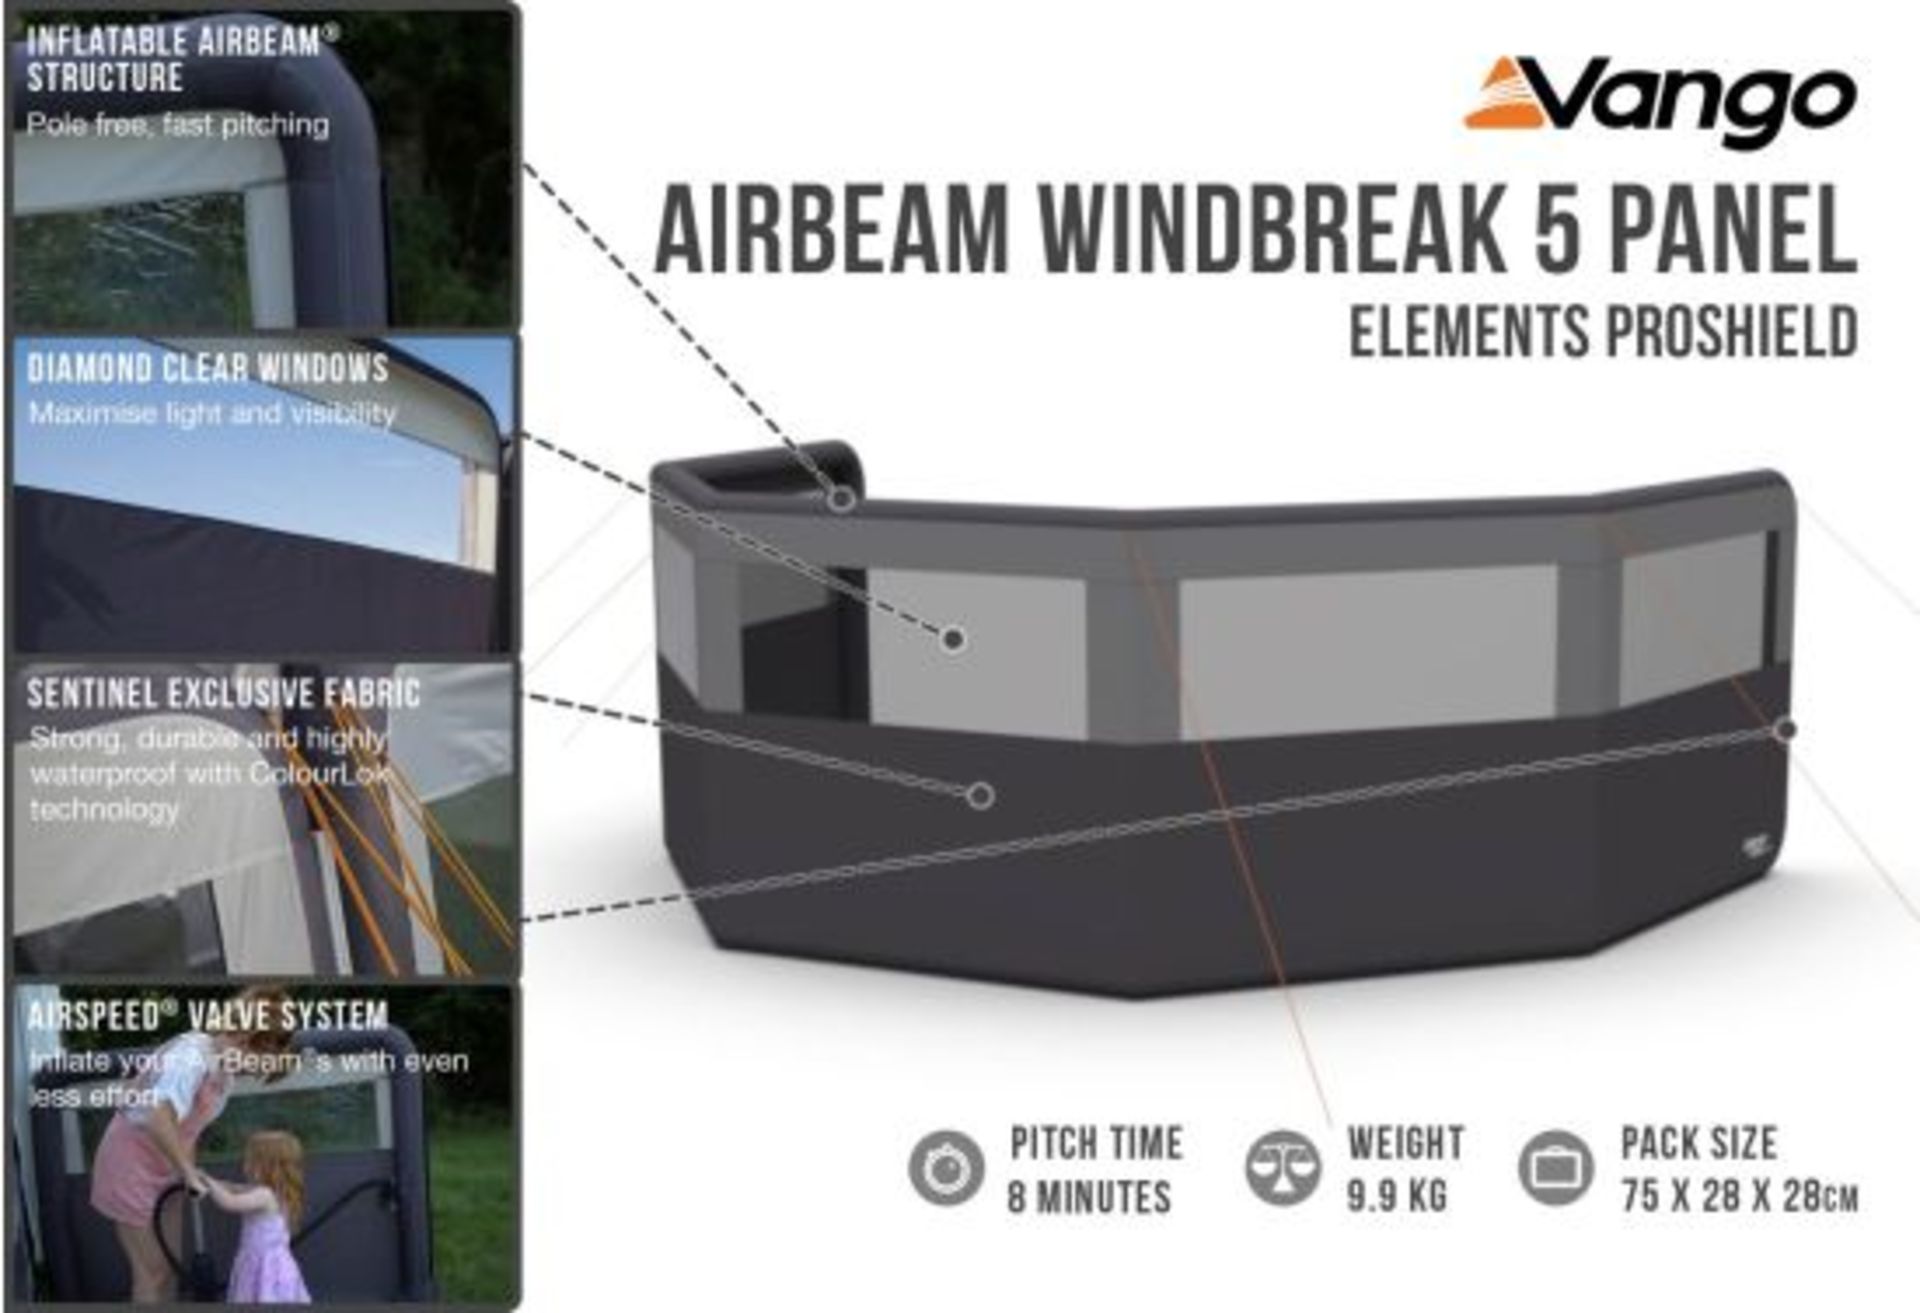 Vango AirBeam Windbreak Elements ProShield 5 Panel - Image 3 of 3